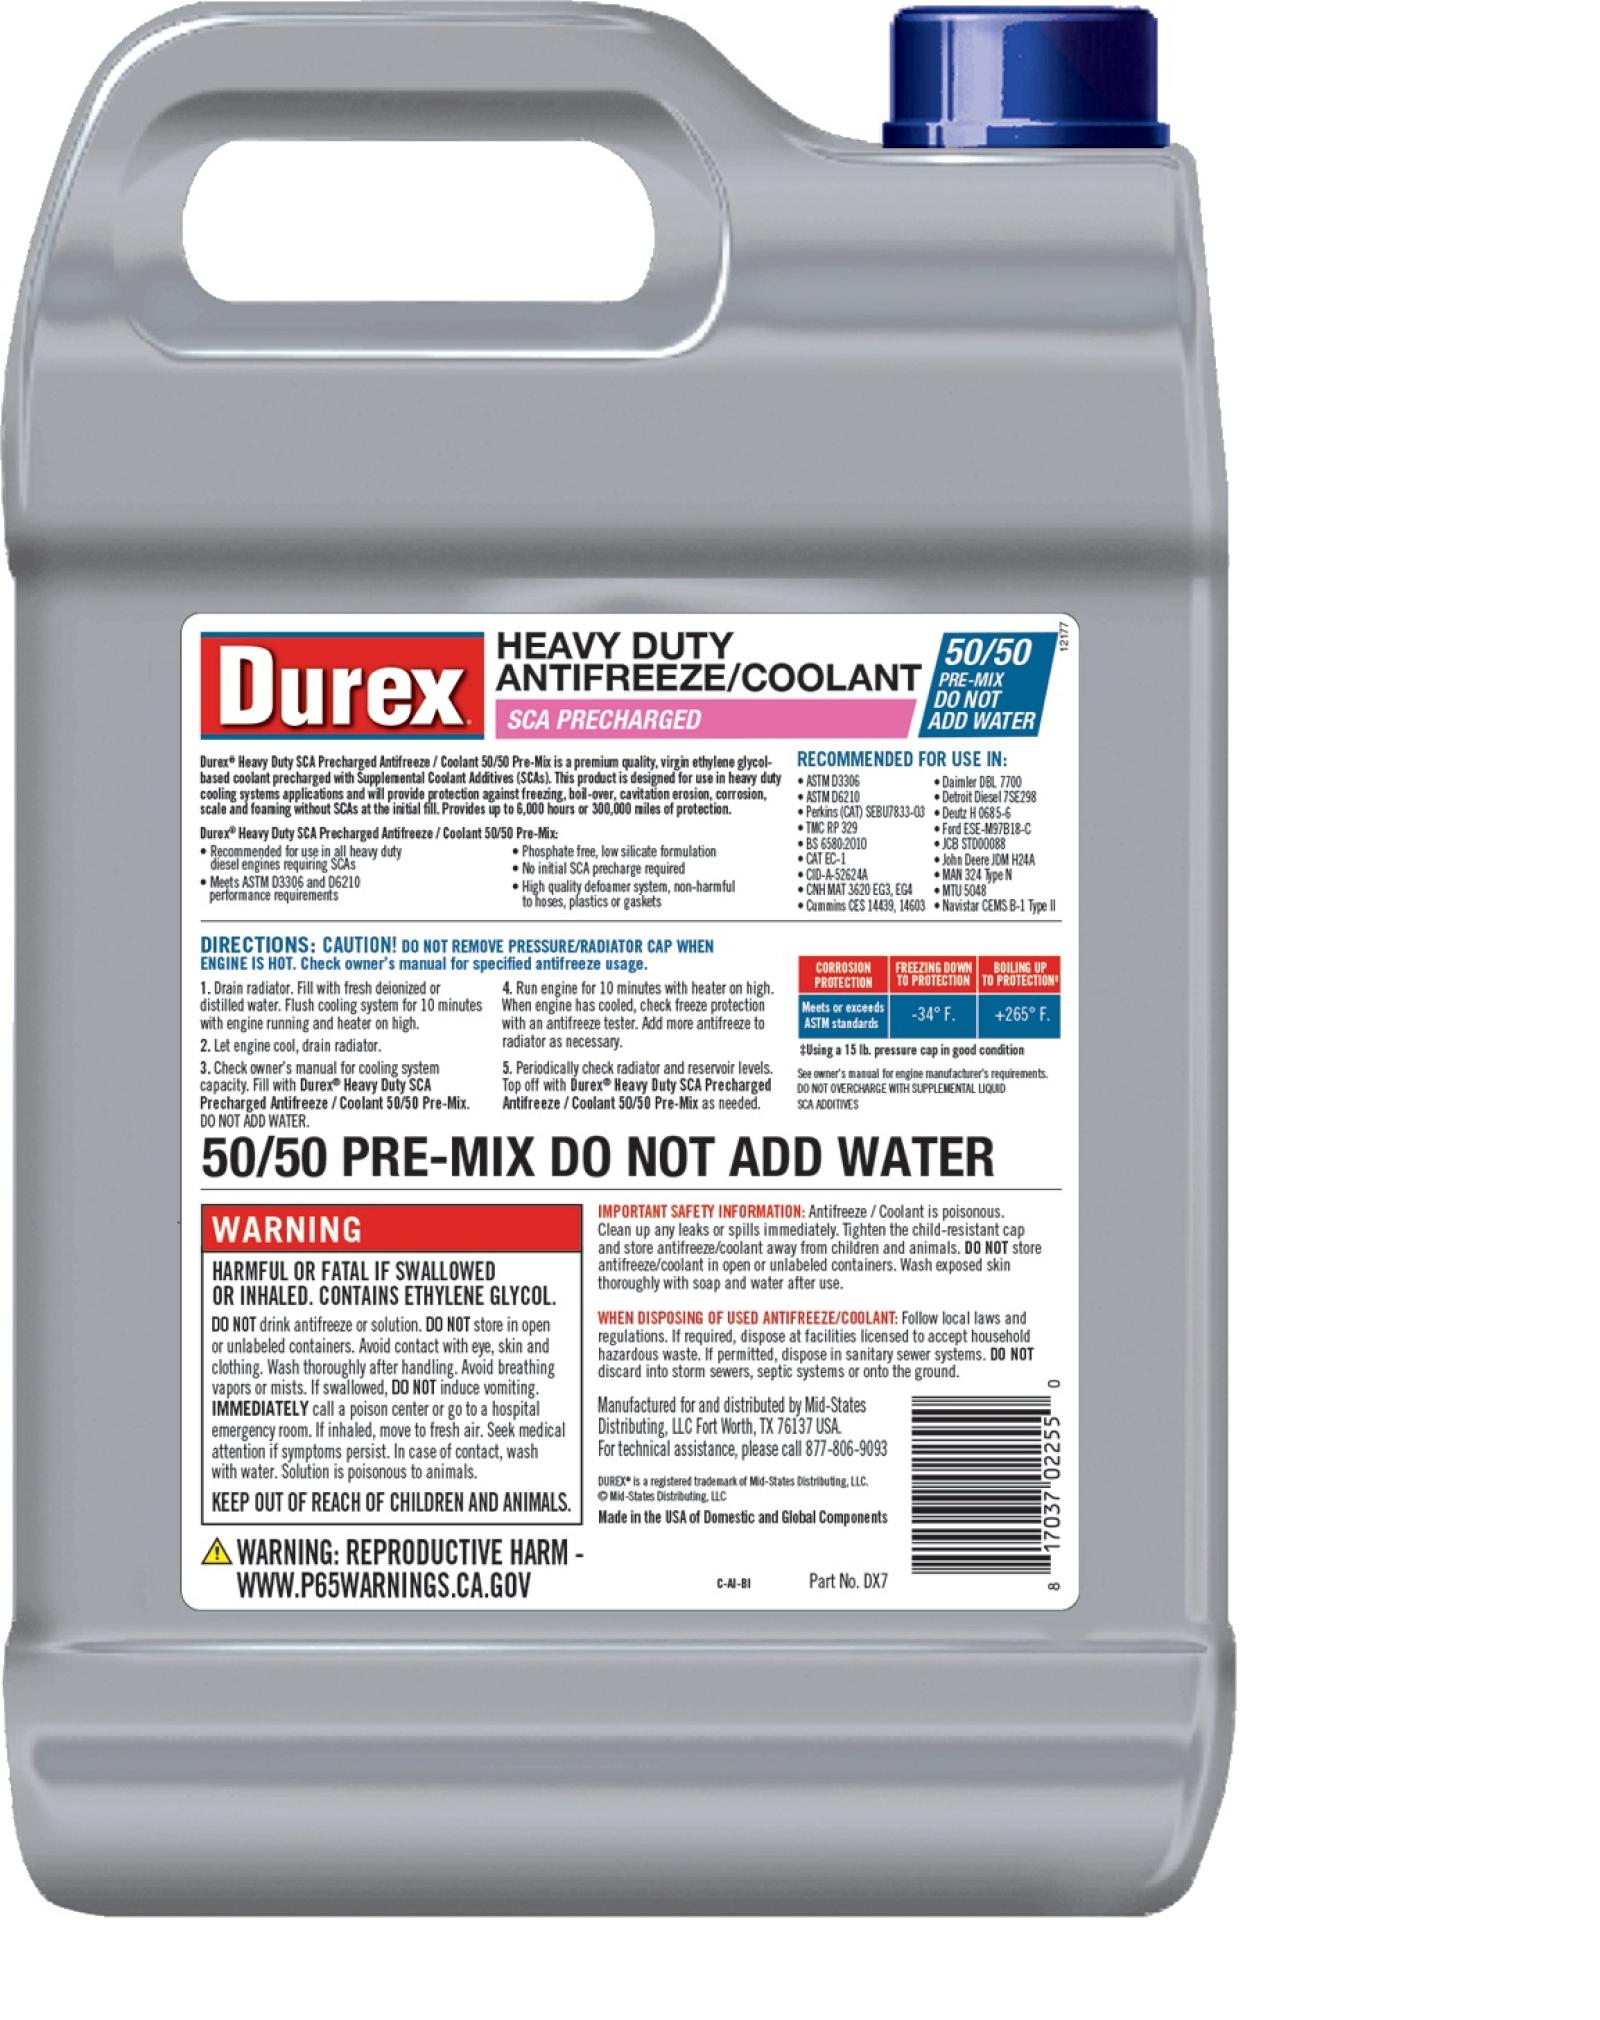 durex-heavy-duty-sca-pre-charged-formula-50-50-antifreeze-coolant